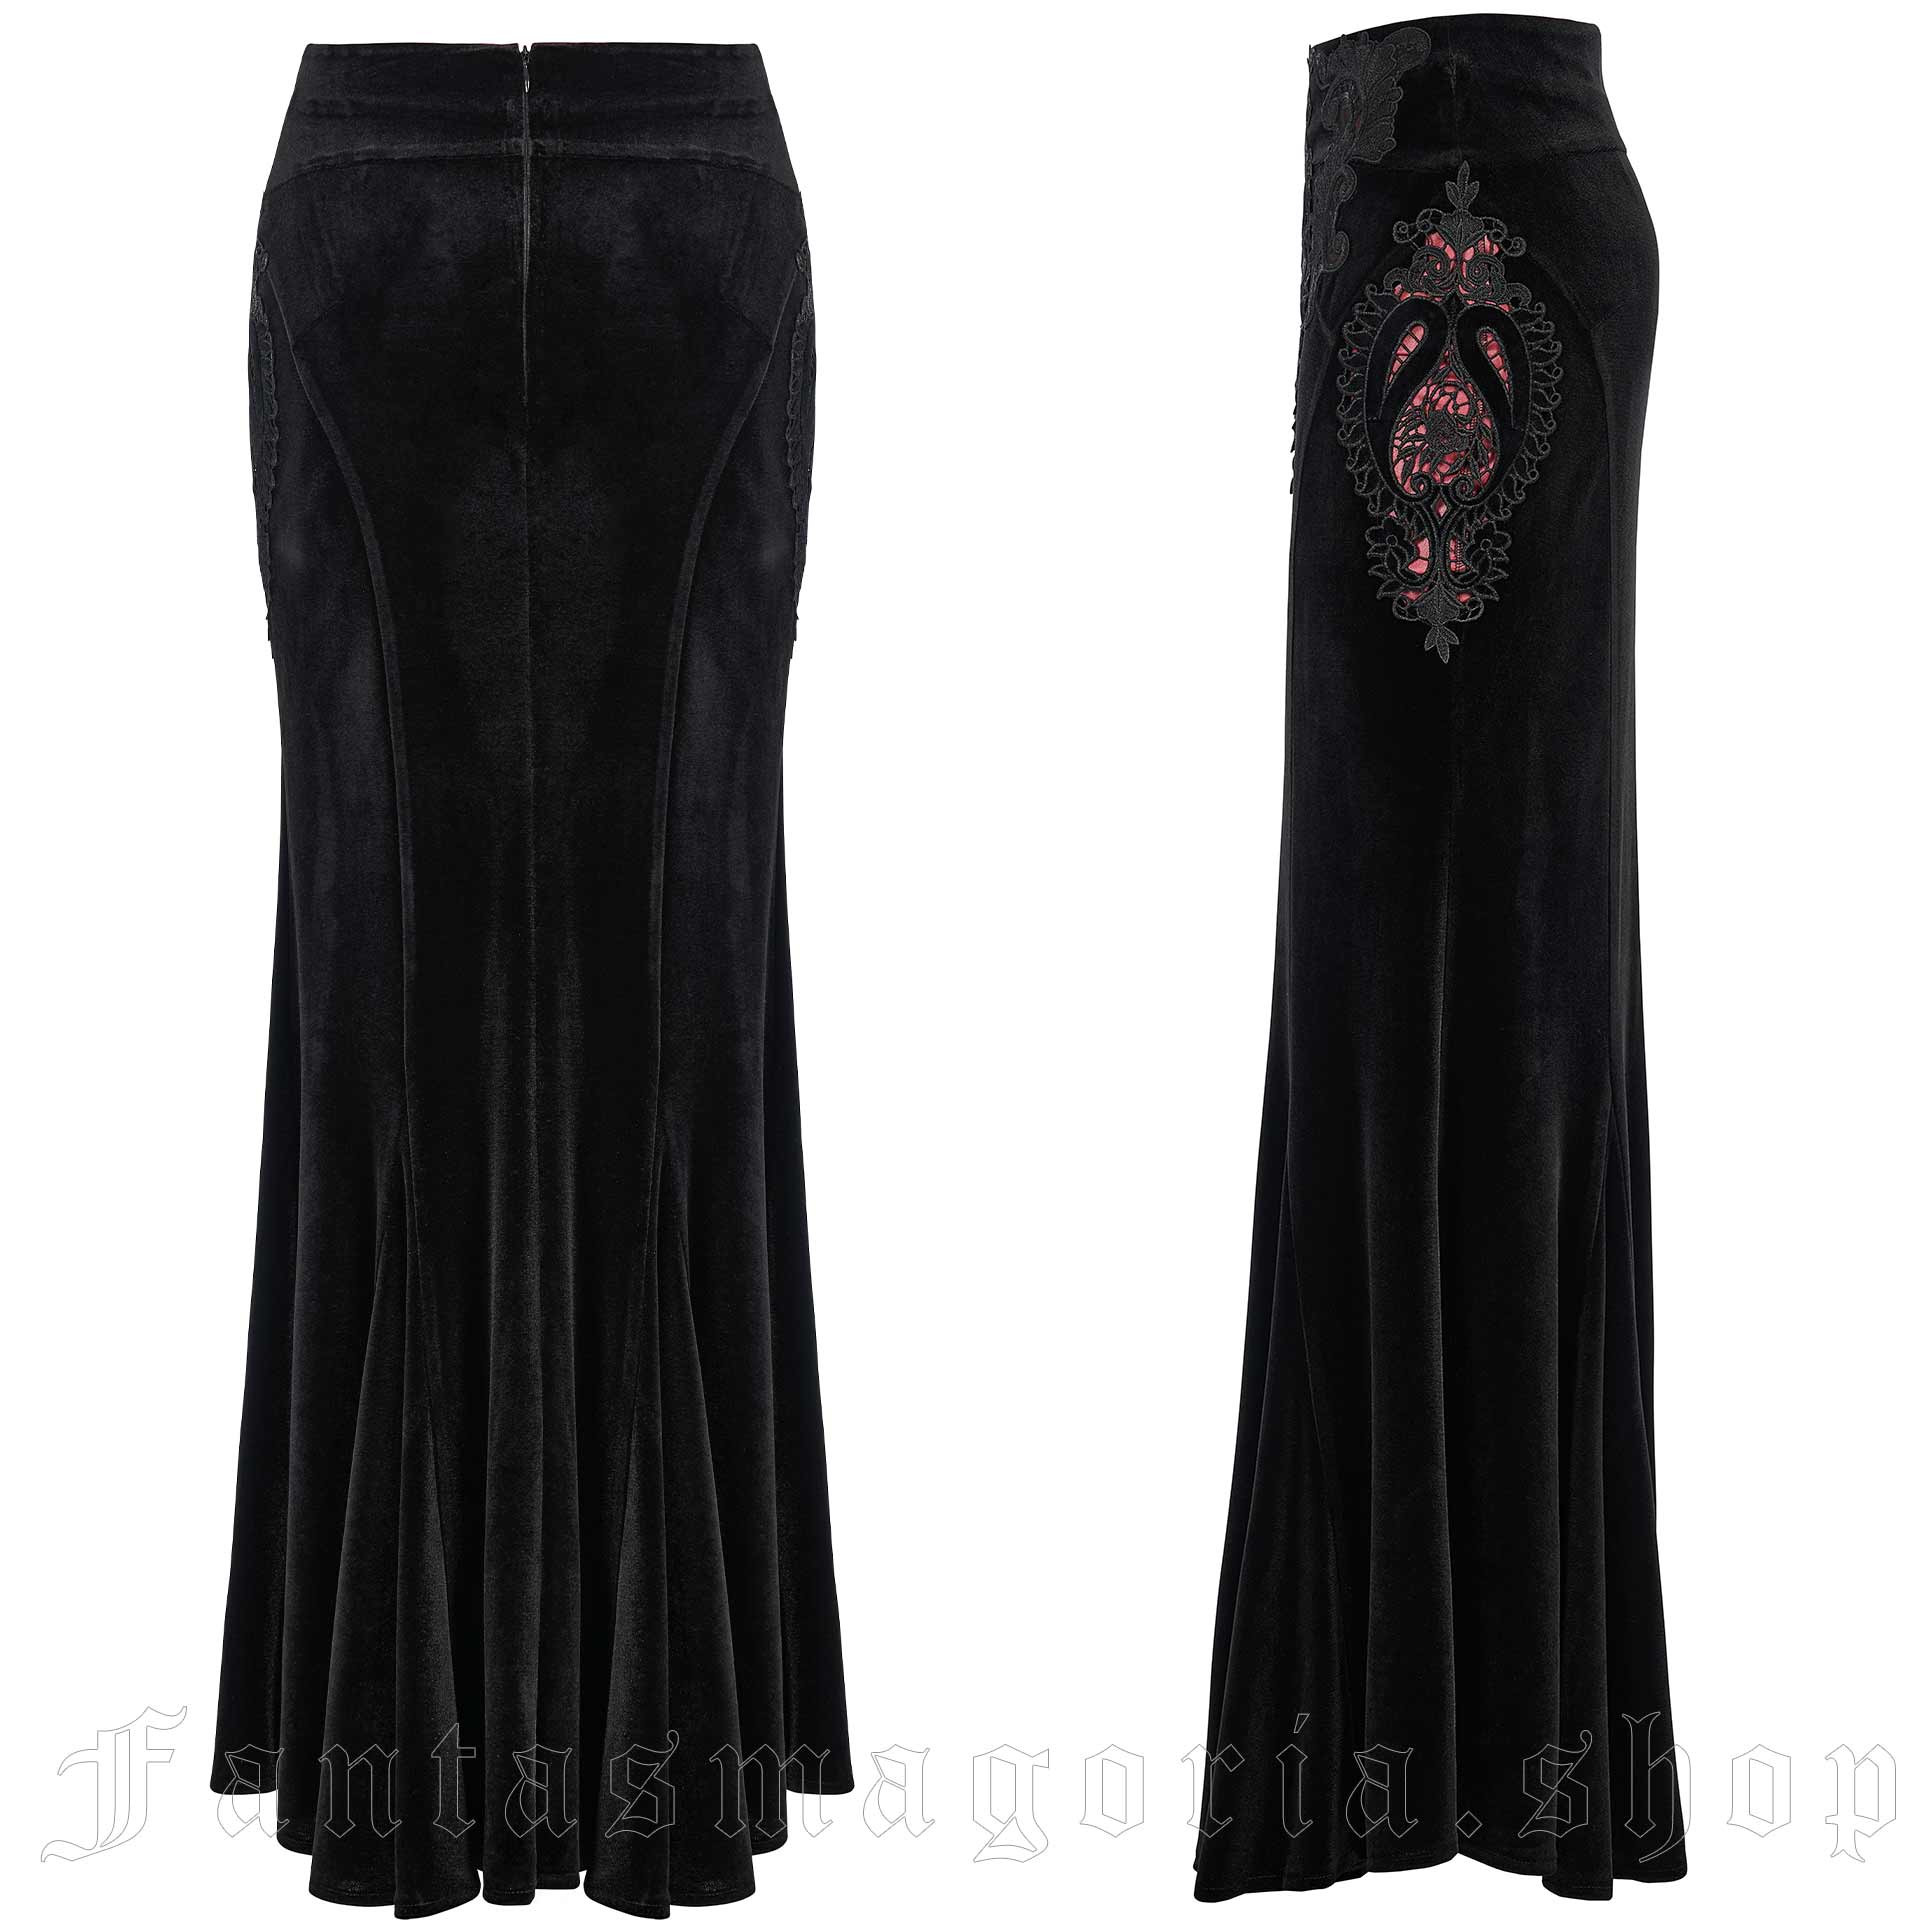 Black Velvet Micro Mini Skirt XS S M L Xl 2xl 3xl Stretch Circle Flared  Plus Size Elastic Waist Goth Gothic Short Spandex -  Canada